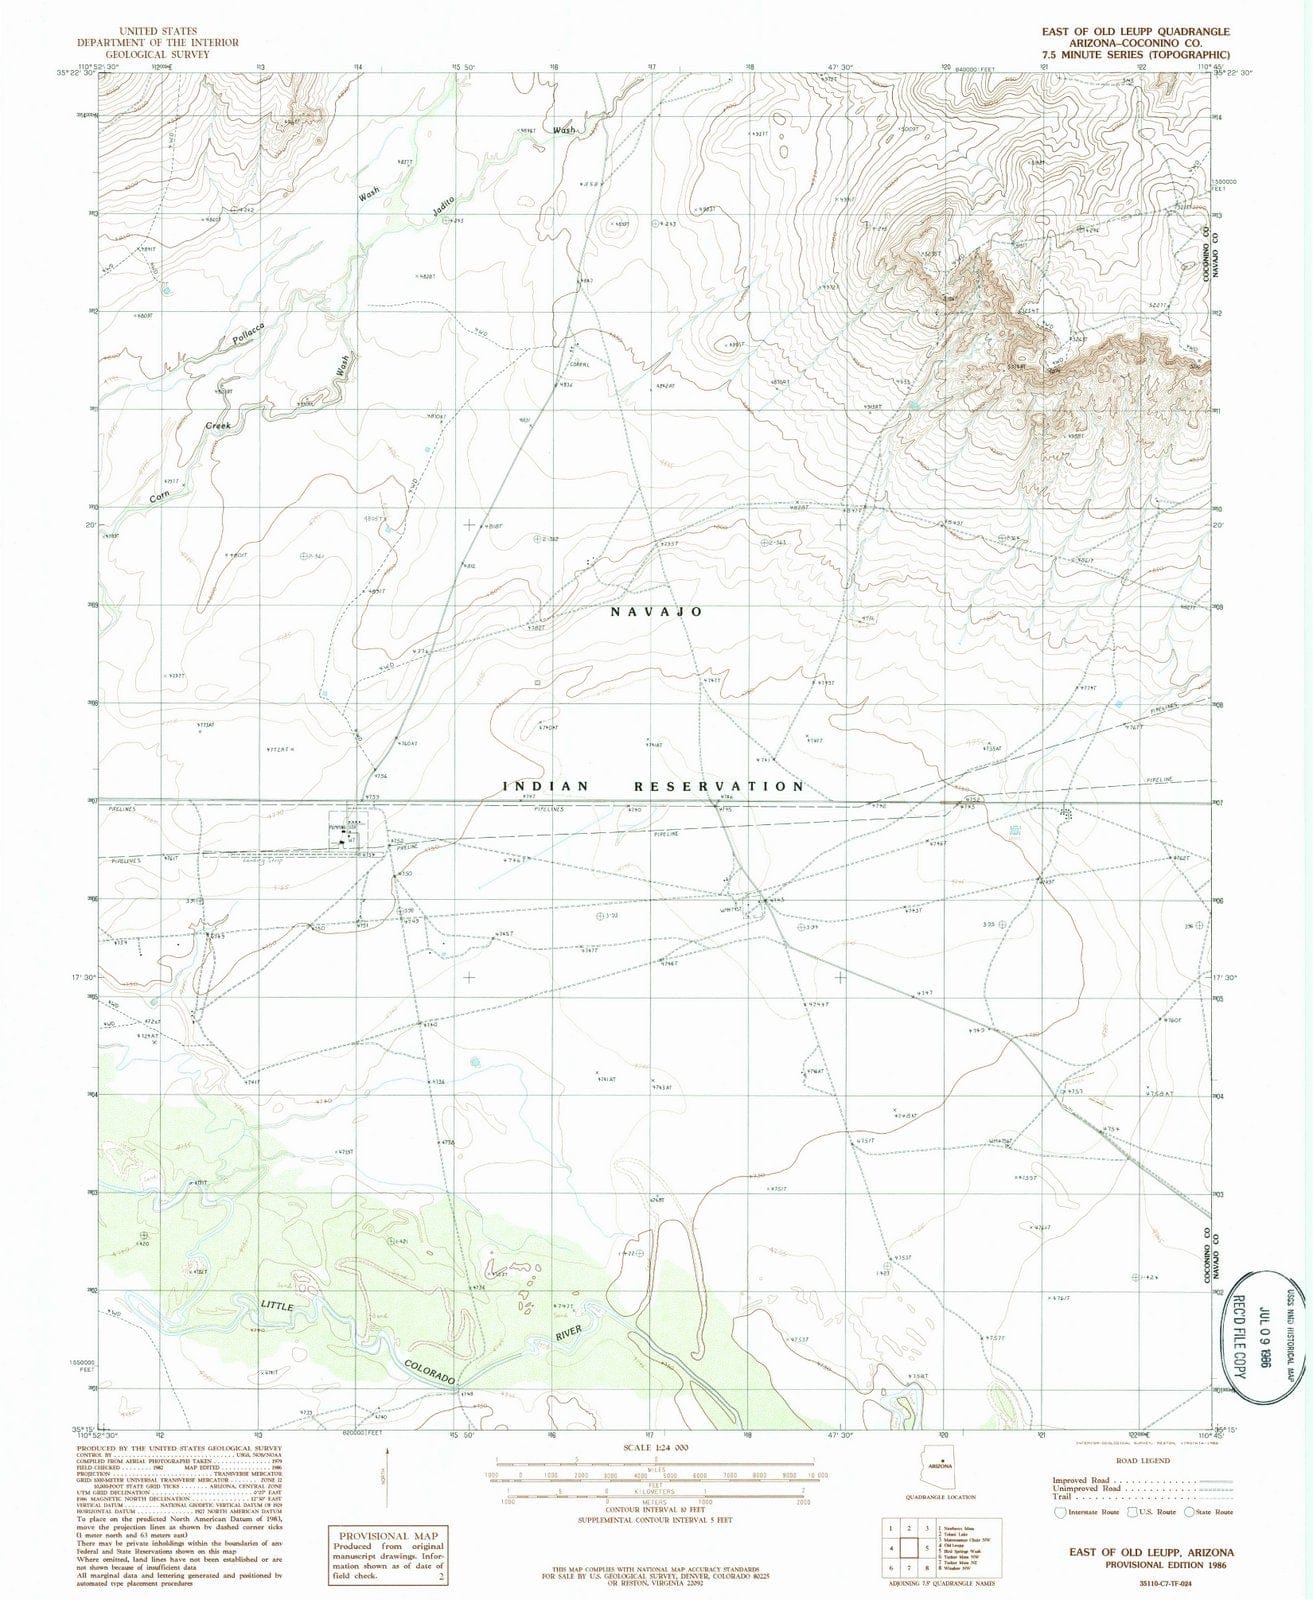 1986 East of Old Leupp, AZ - Arizona - USGS Topographic Map